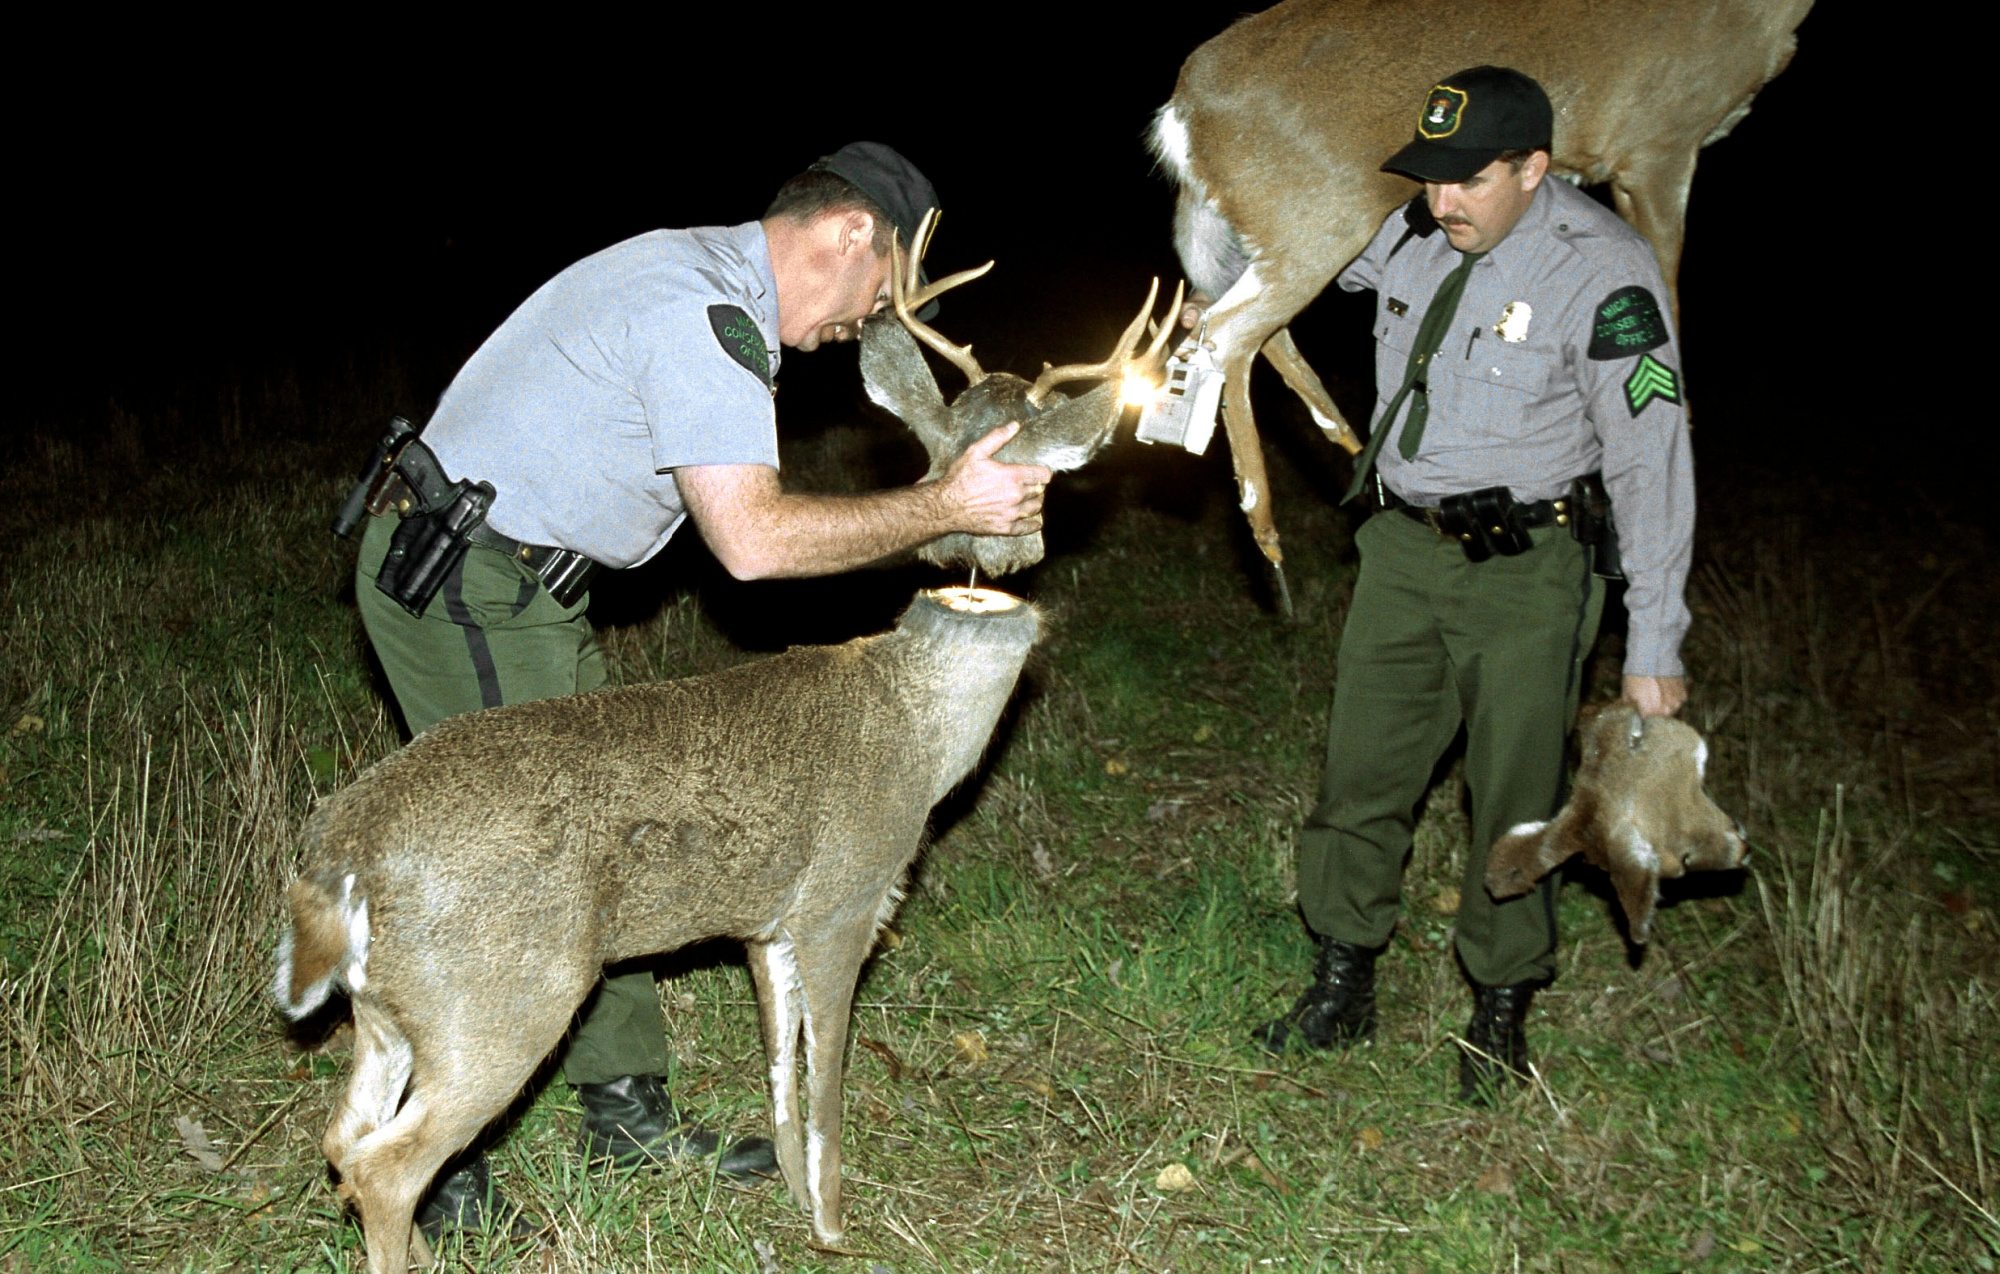 game wardens installing deer decoys